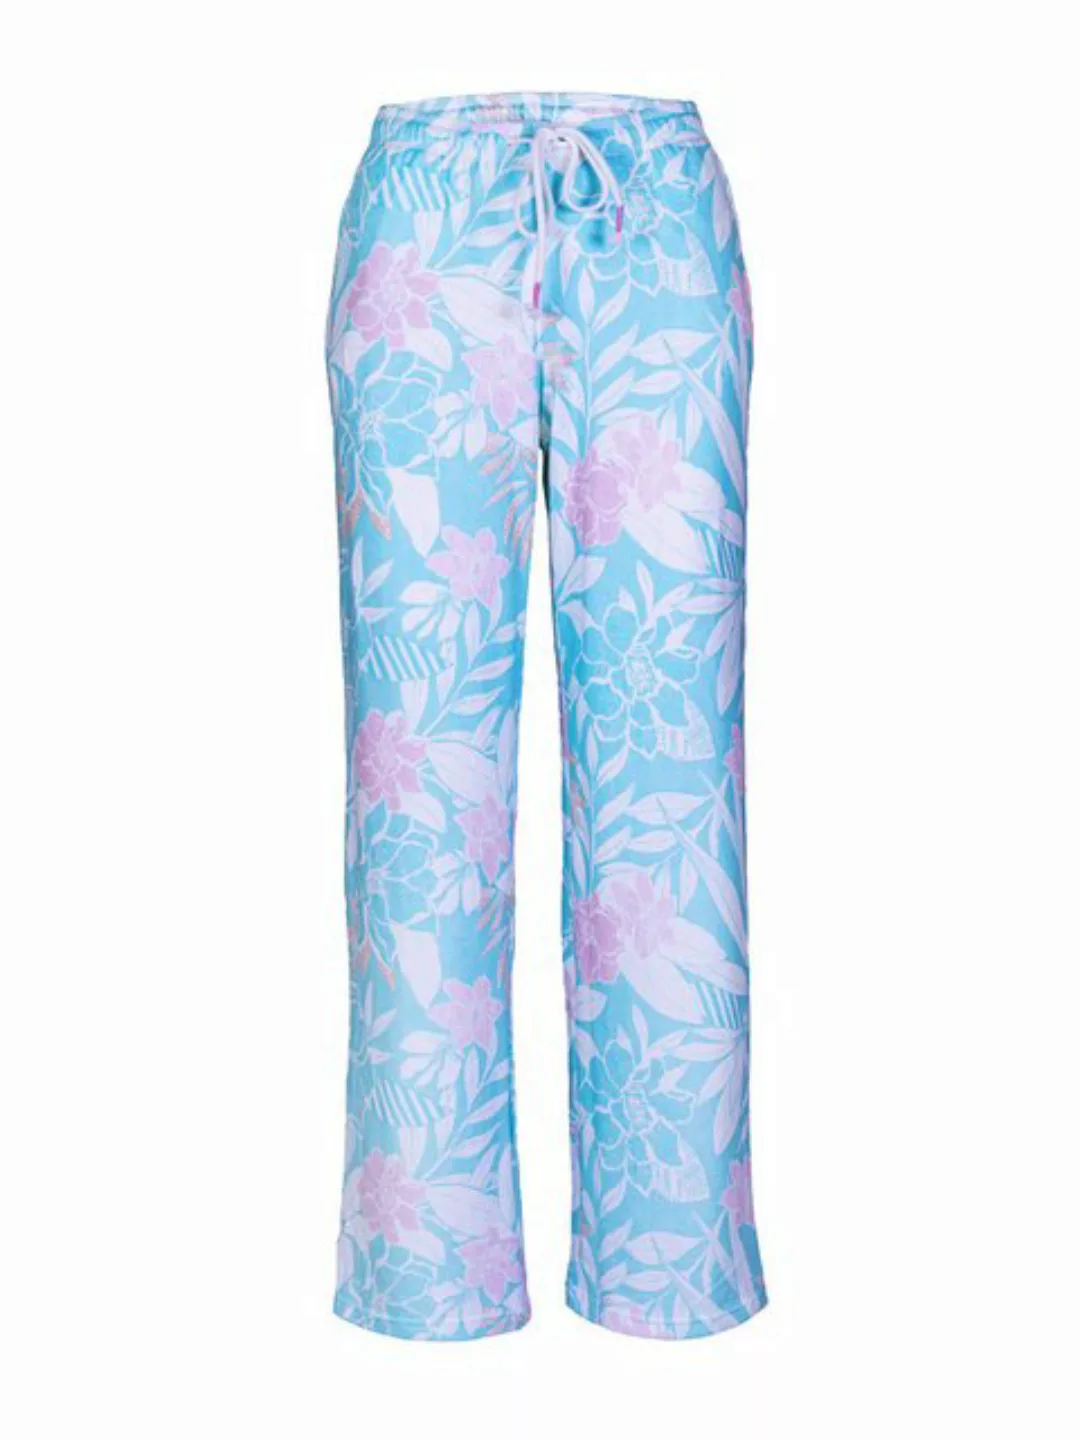 PJ Salvage Pyjamahose pant - Peachy Party schlaf-hose pyjama schlafmode günstig online kaufen